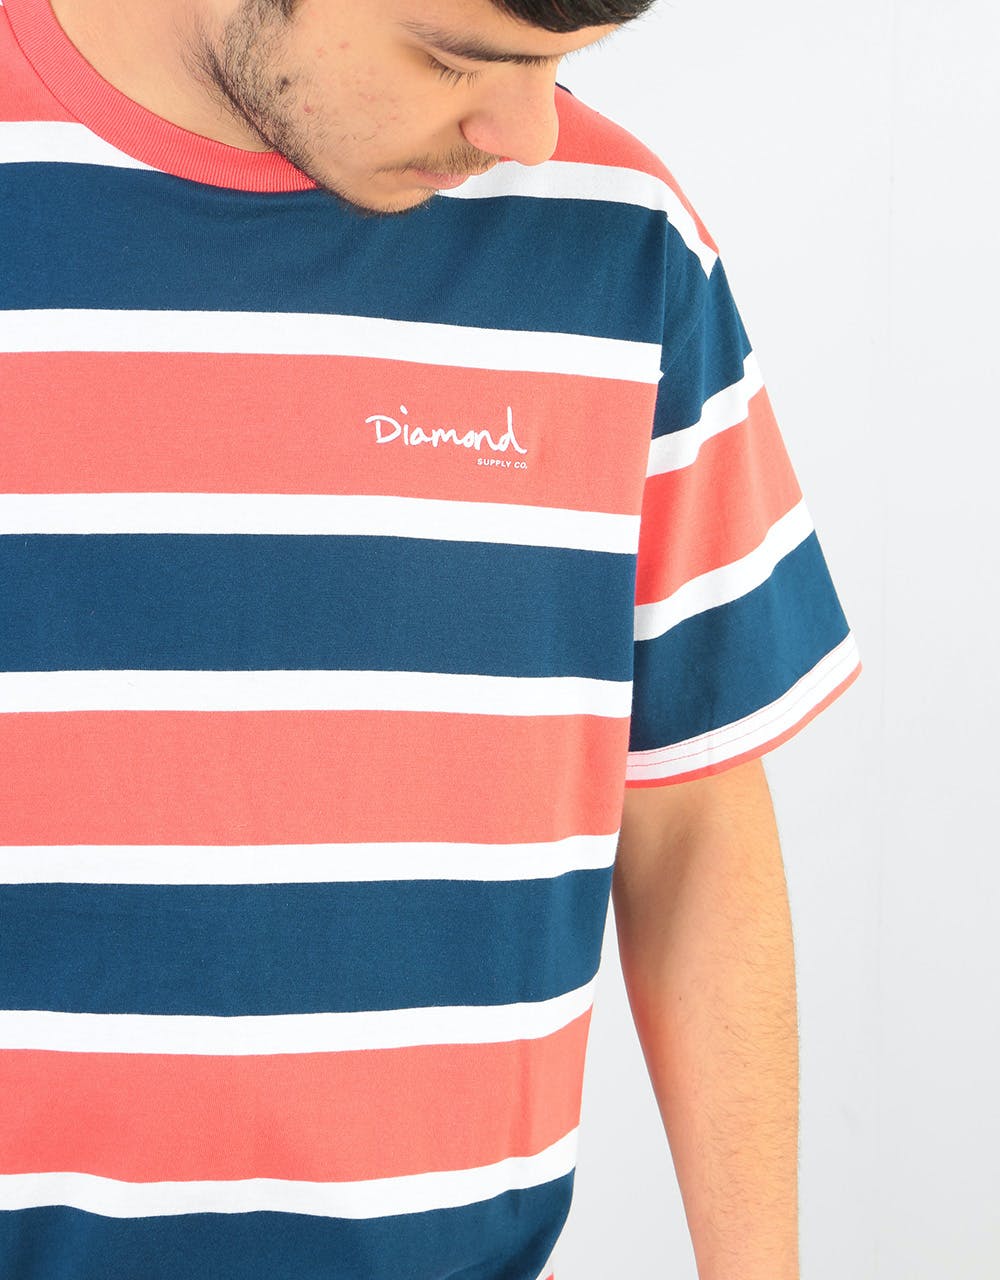 Diamond Mini OG Script Striped T-Shirt - Coral